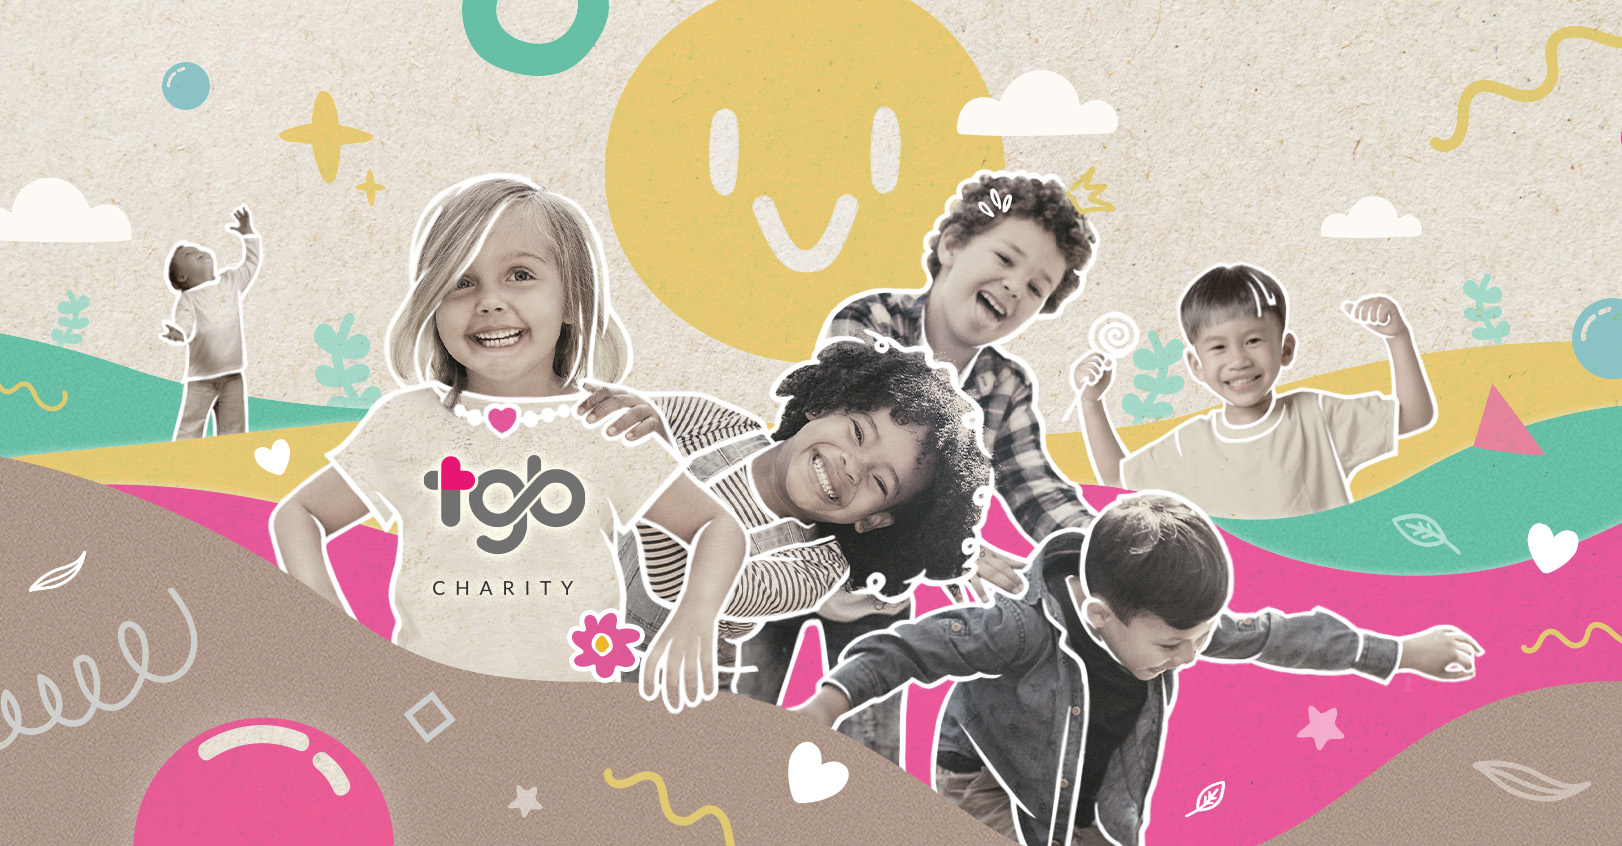 TGB Charity: 每个孩子都值得拥有美好的未来